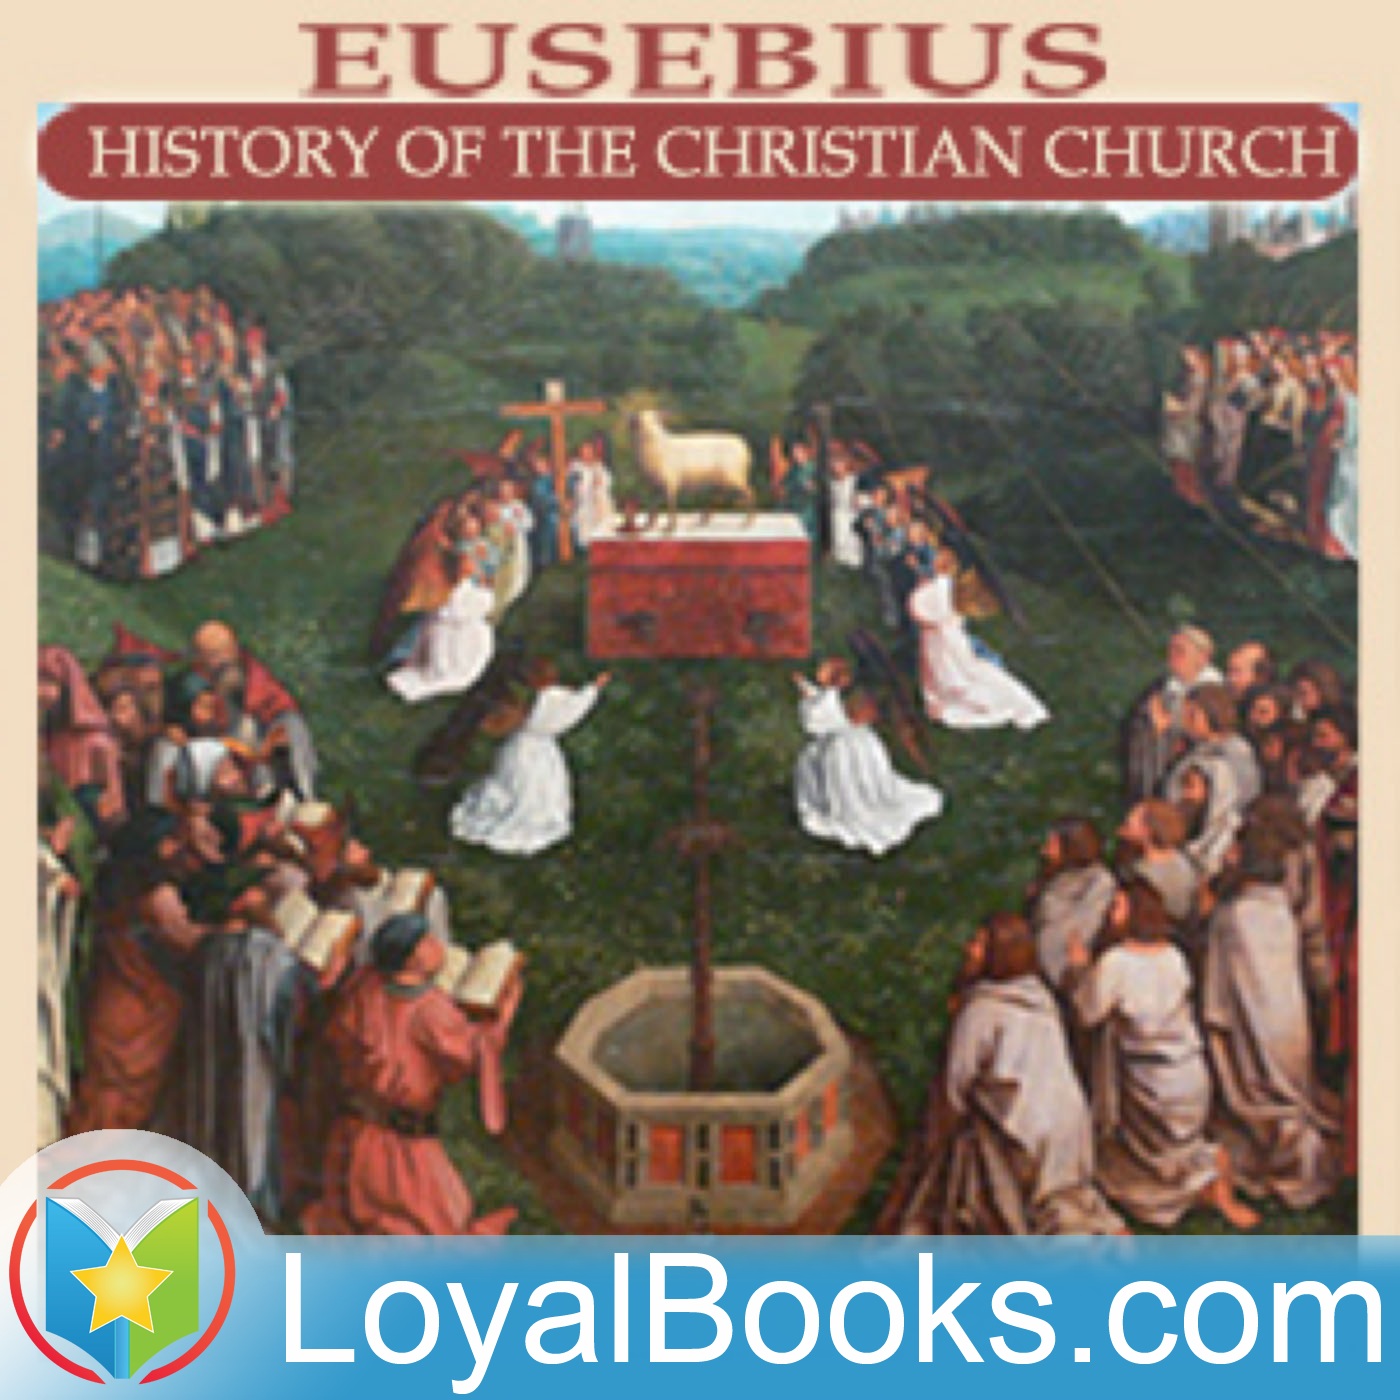 Eusebius' History of the Christian Church by Eusebius of Caesarea